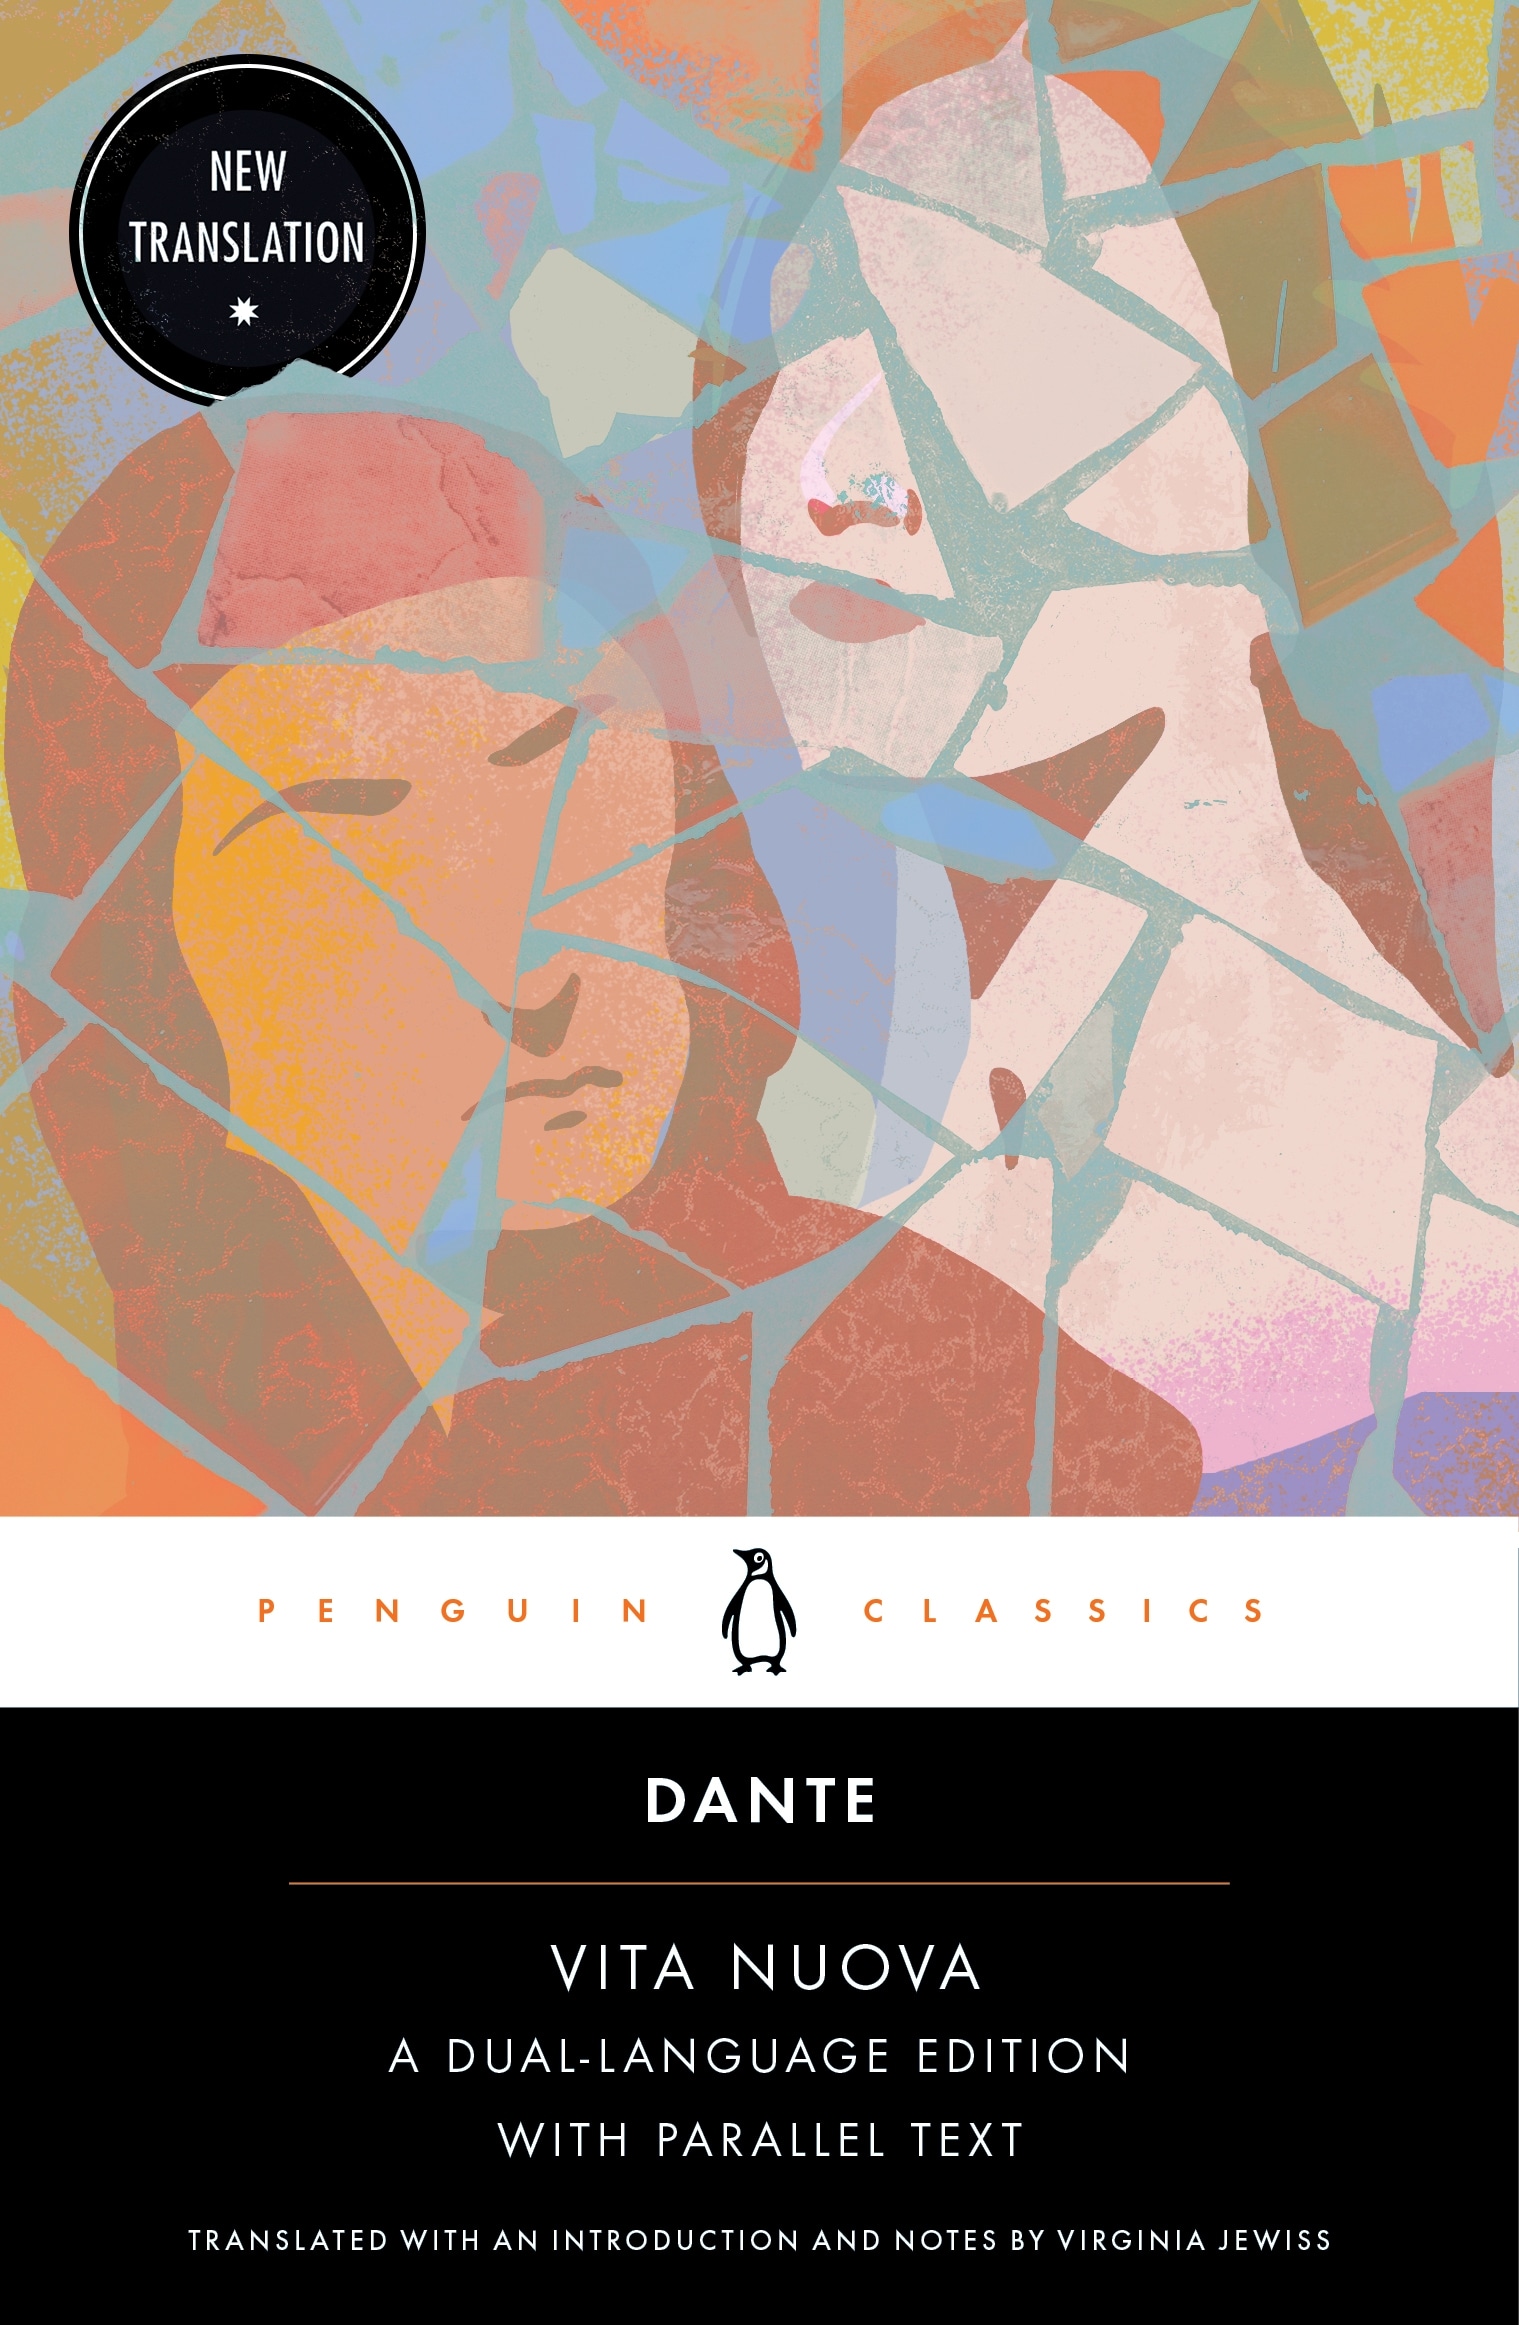 Book “Vita Nuova” by Dante Alighieri — October 6, 2022